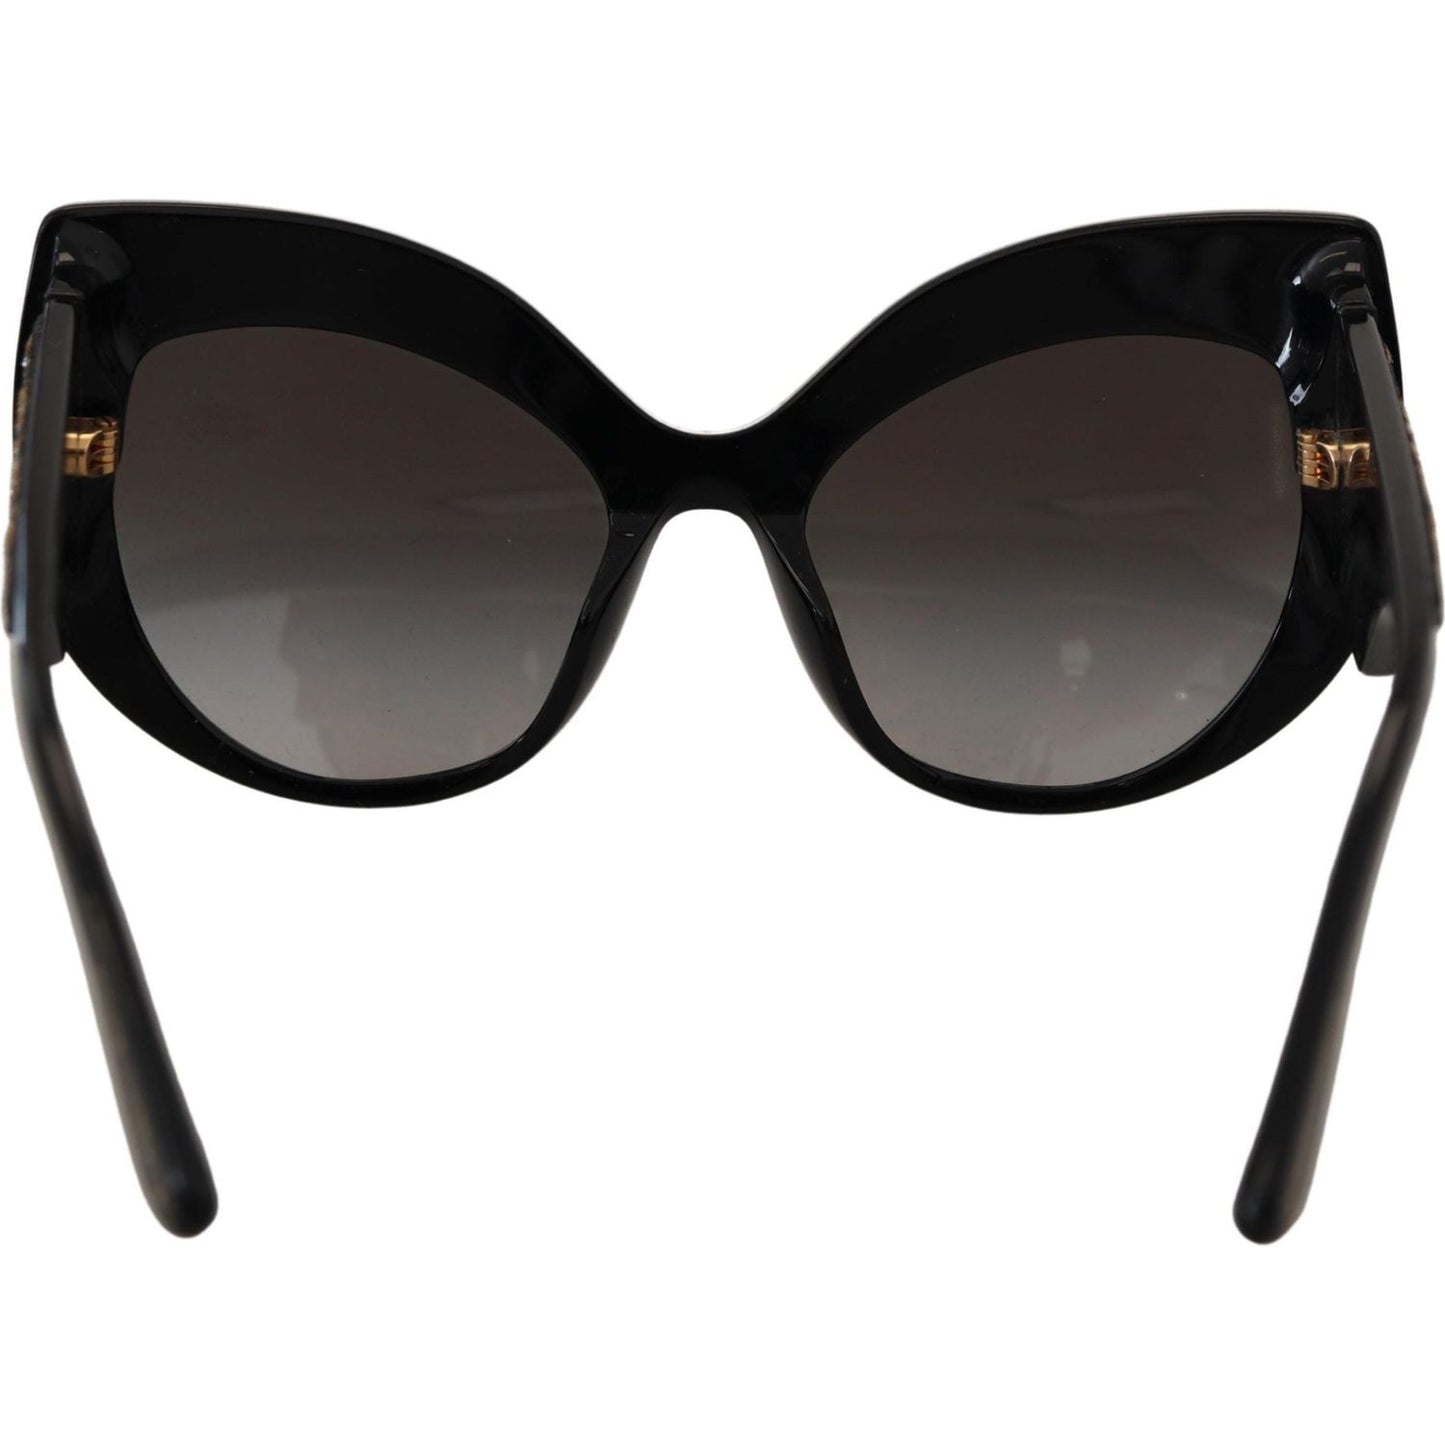 Dolce & Gabbana Butterfly Polarized Sequin Sunglasses black-gold-sequin-butterfly-polarized-dg4326-sunglasses